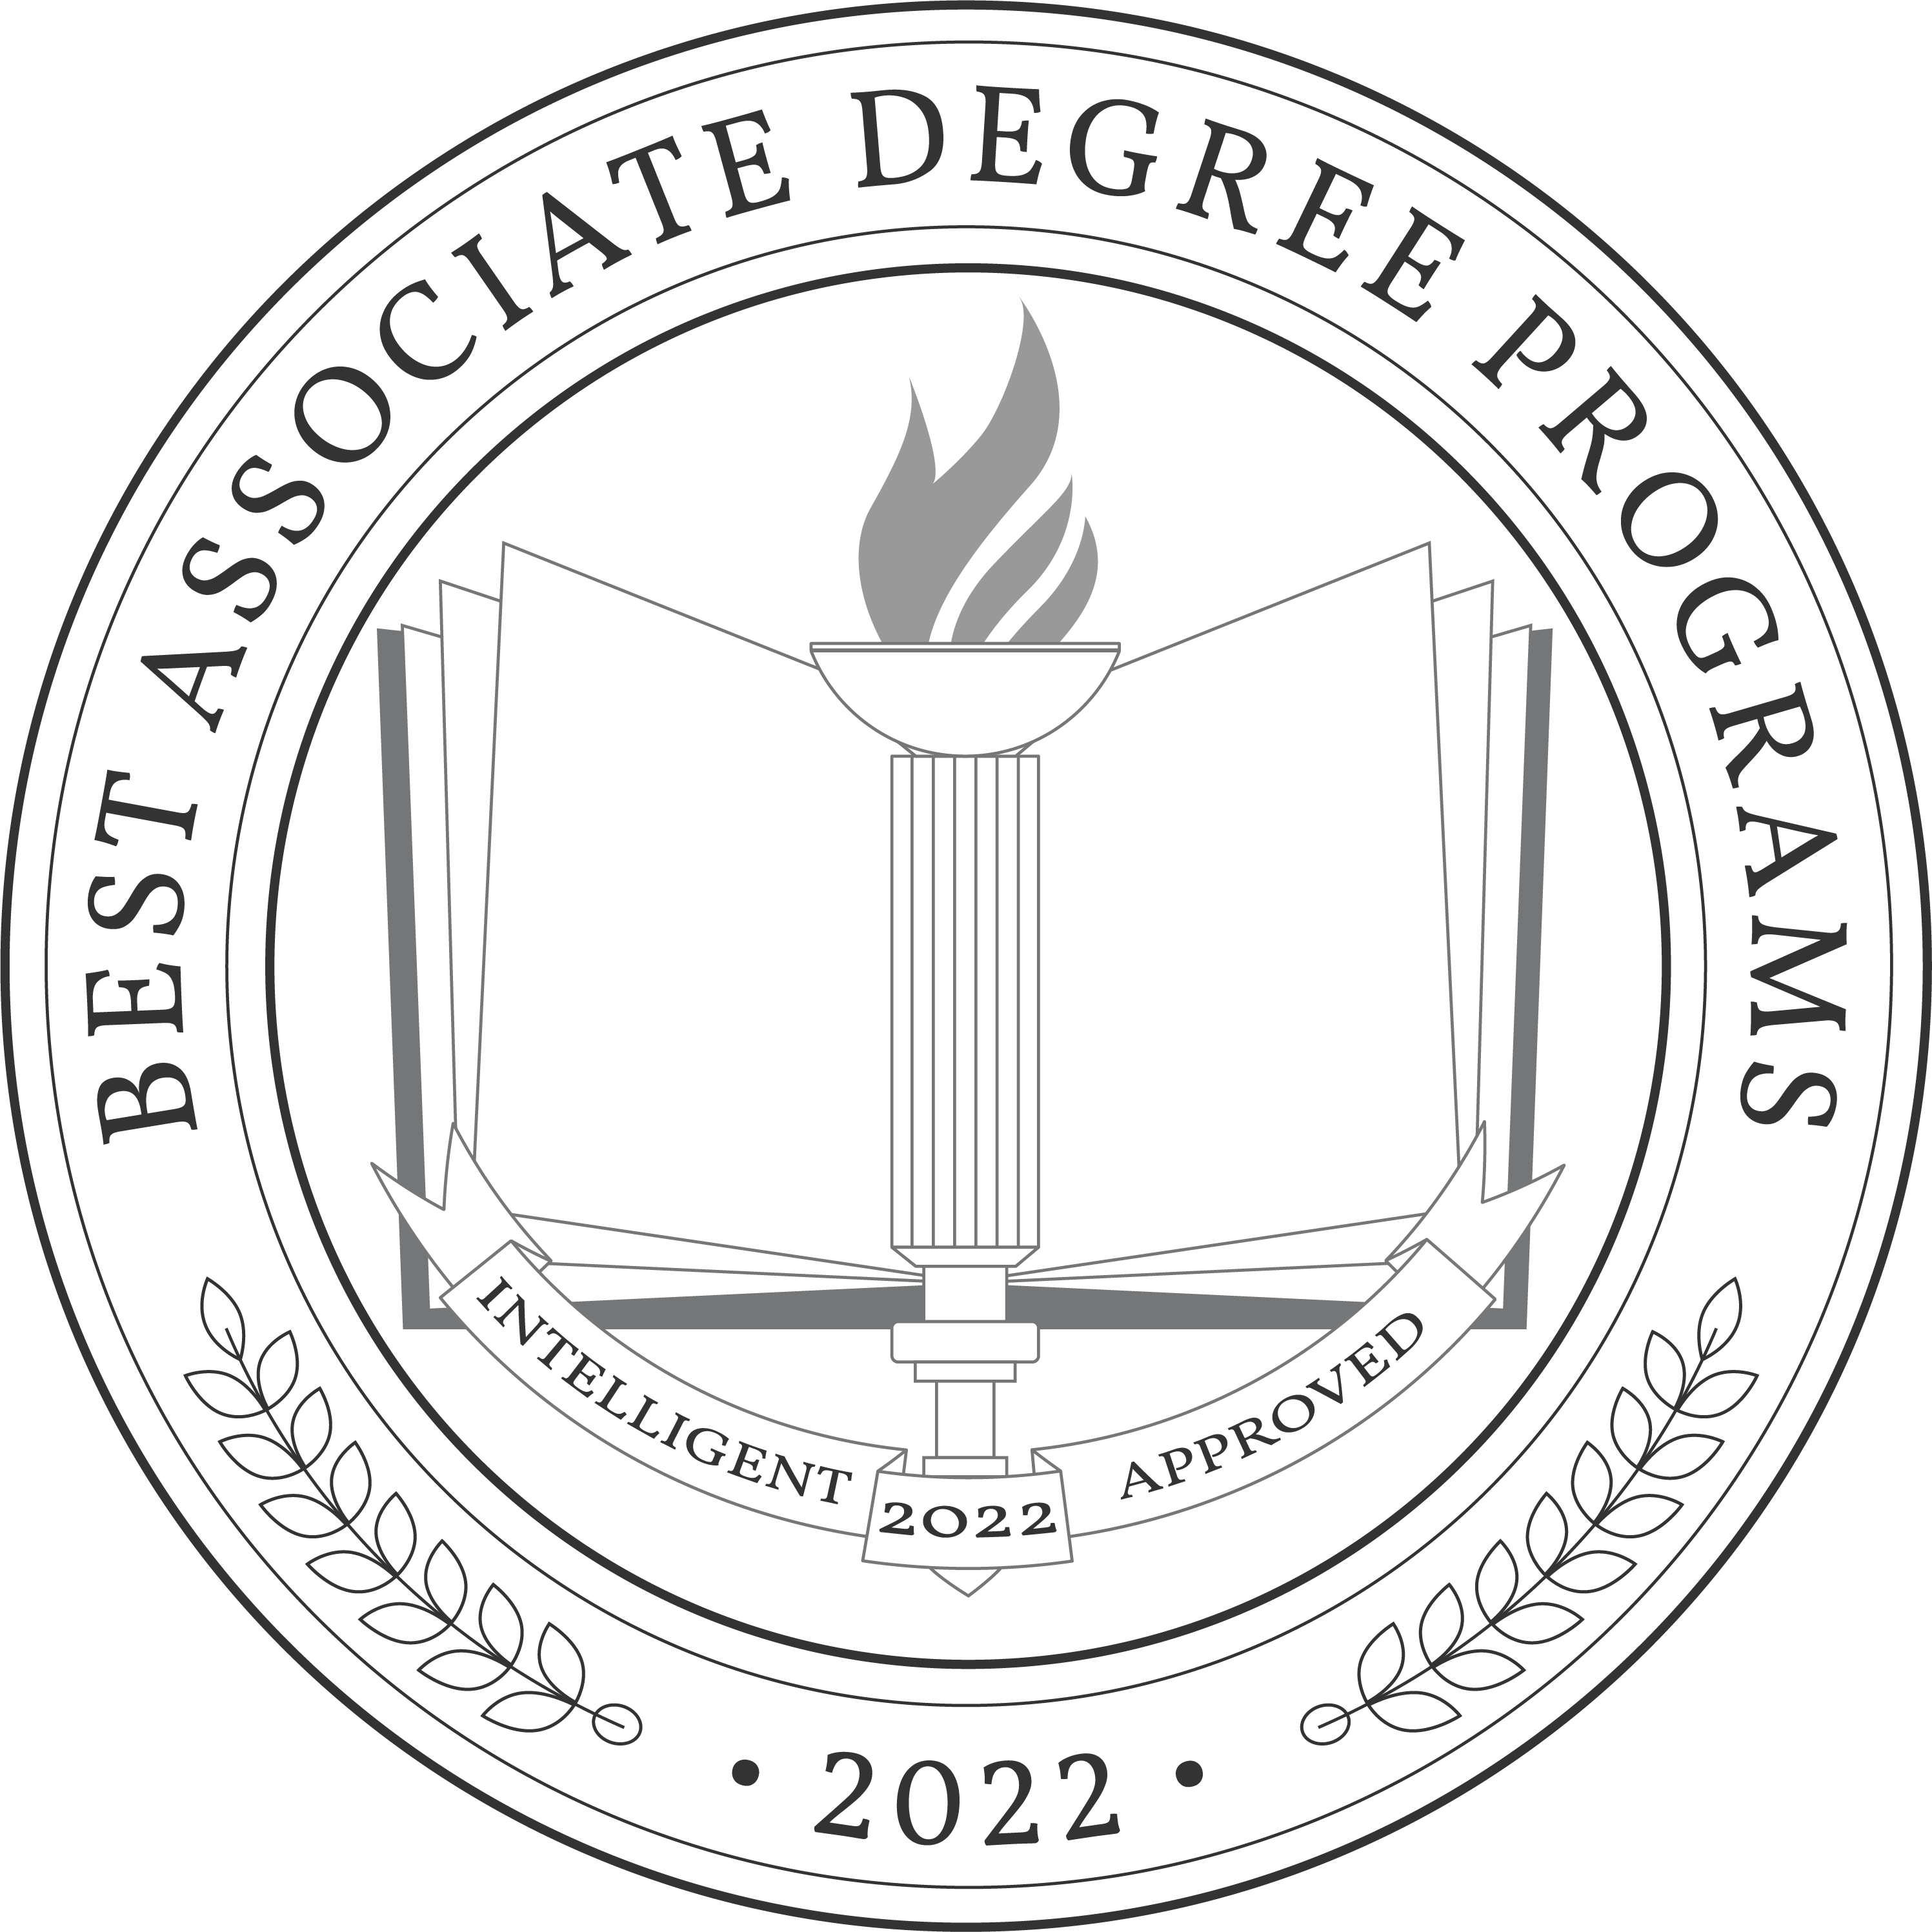 Best Associate Degree 2022 Badge